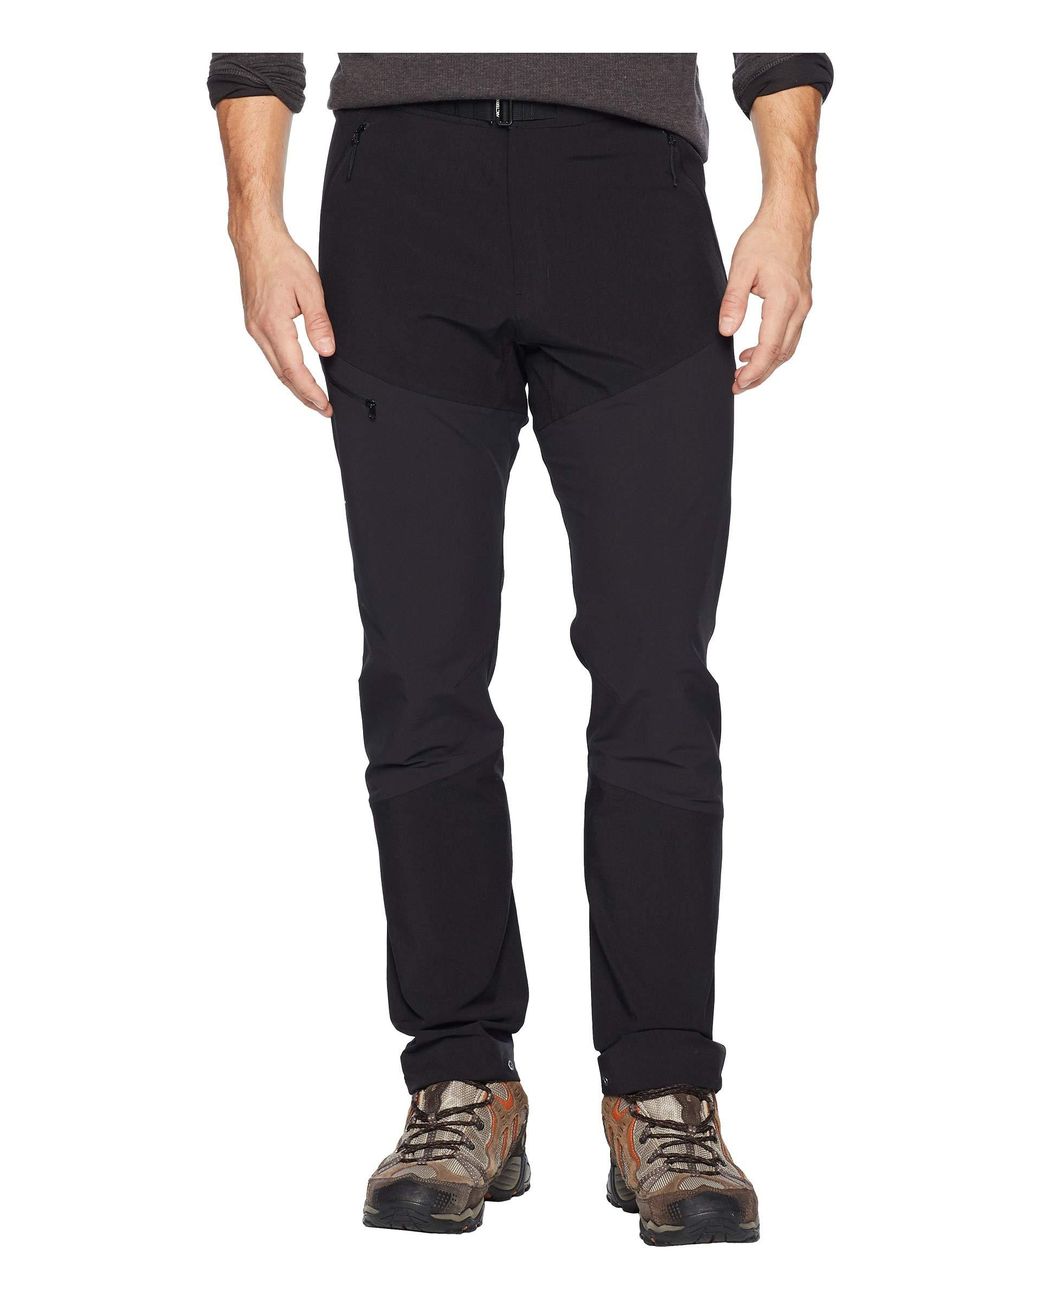 Arc'teryx Cotton Sigma Fl Pants in Black for Men - Lyst